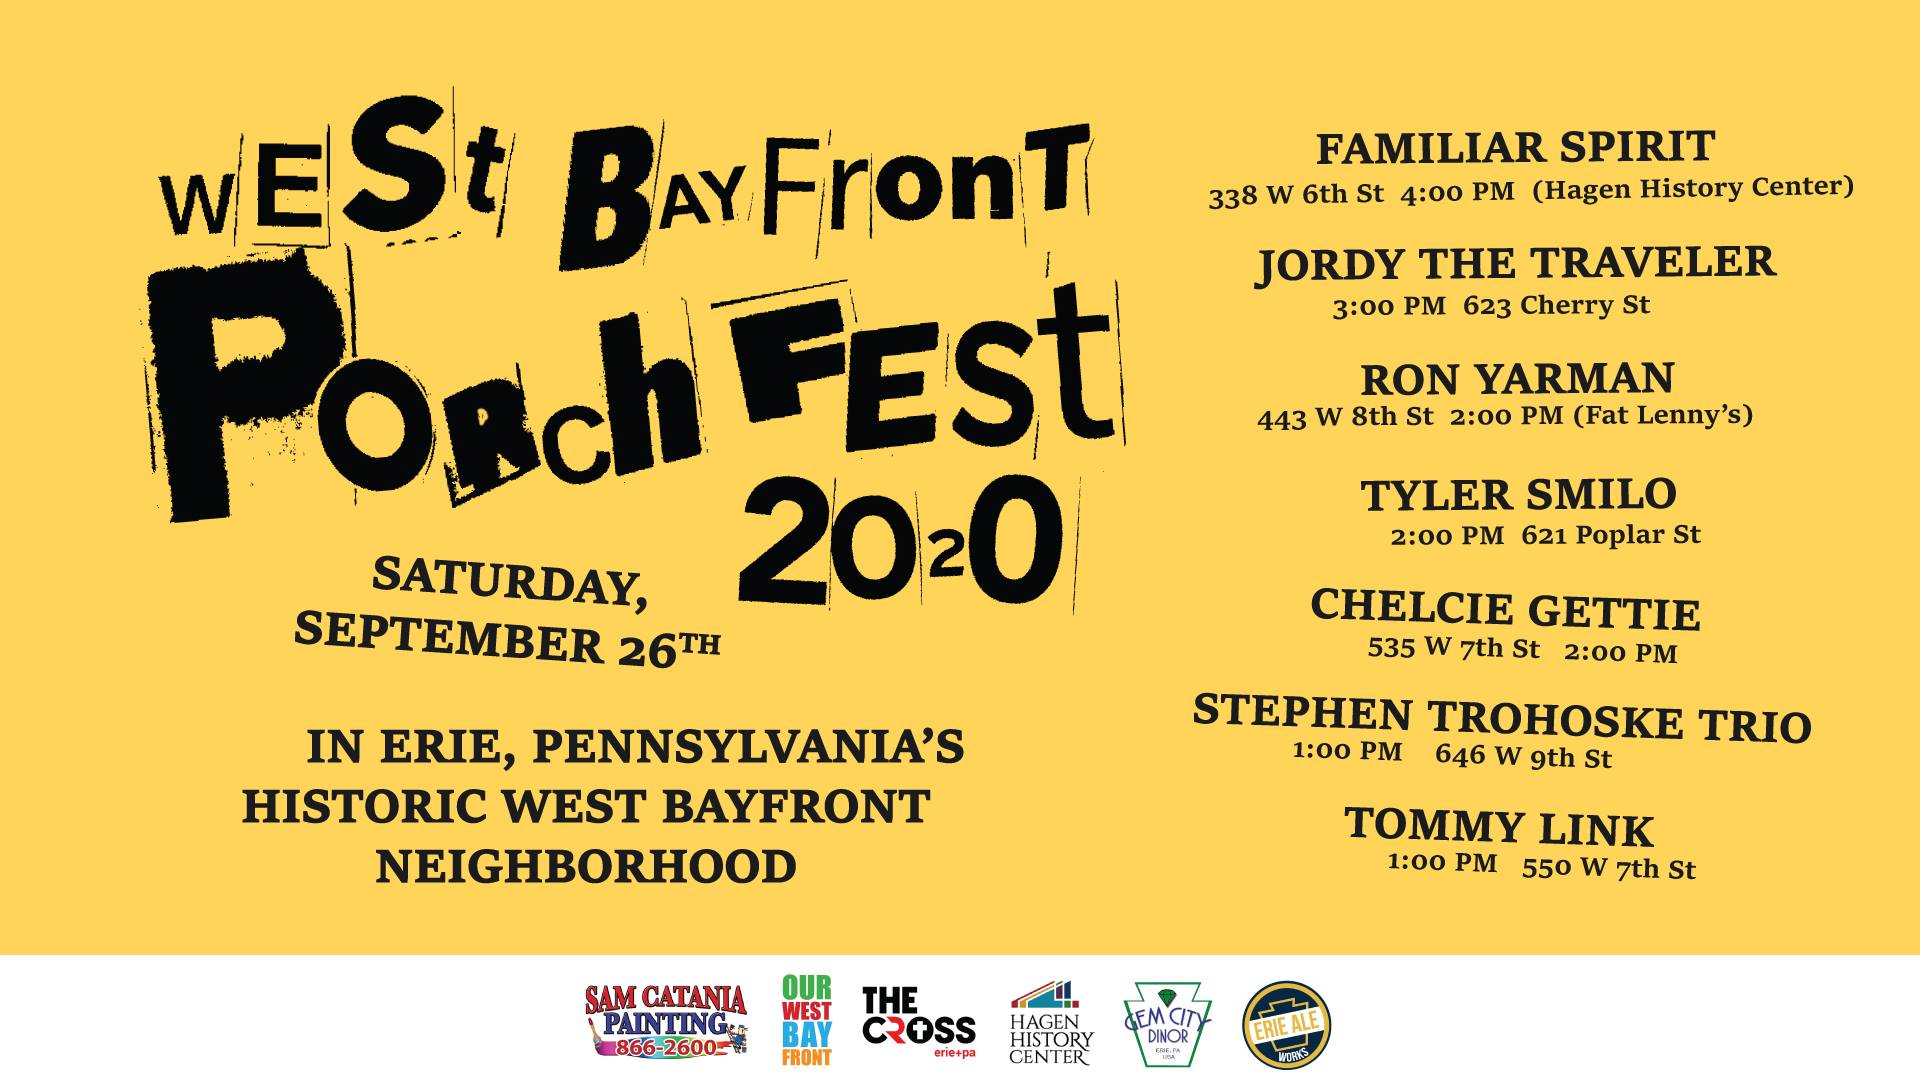 West Bayfront Porch Fest 2020